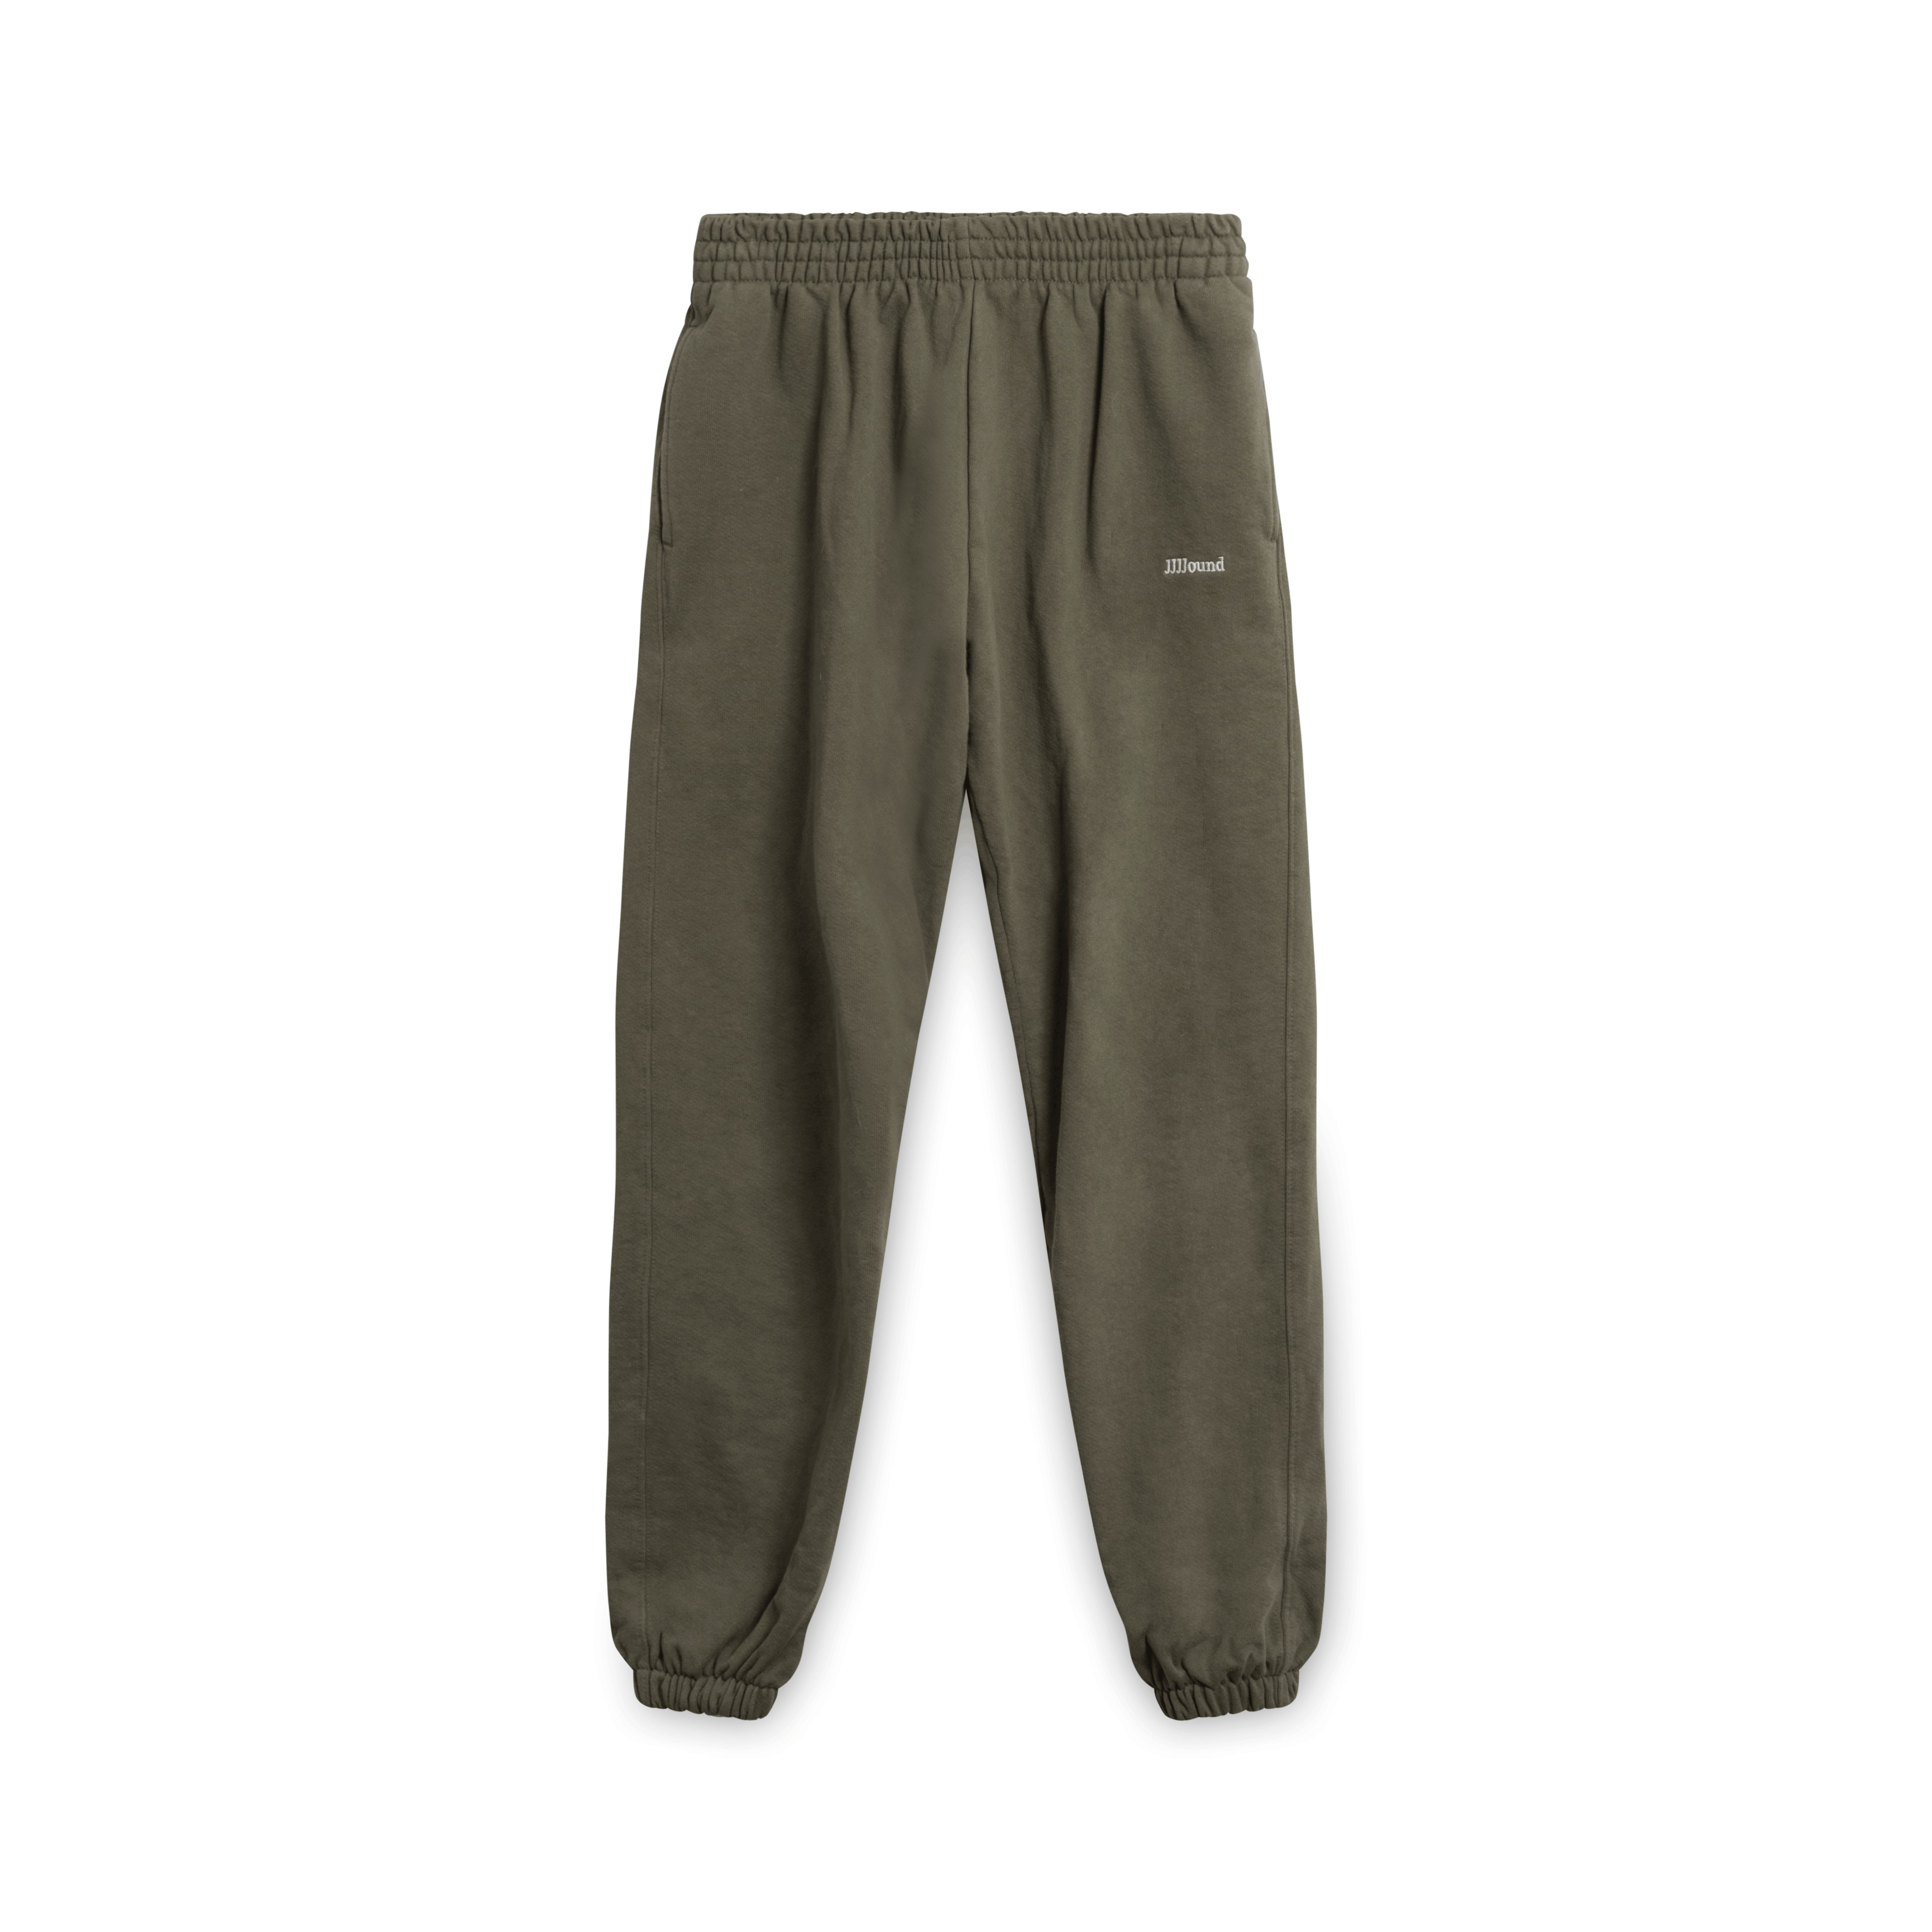 JJJJound J/95 Sweatpants - Utility Green by Becky Hearn | Basic.Space